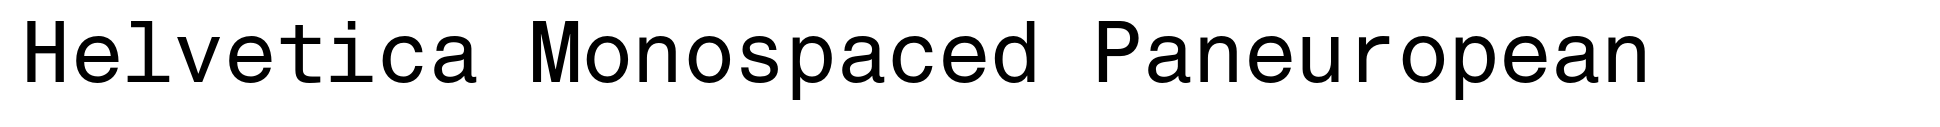 Helvetica Monospaced Paneuropean